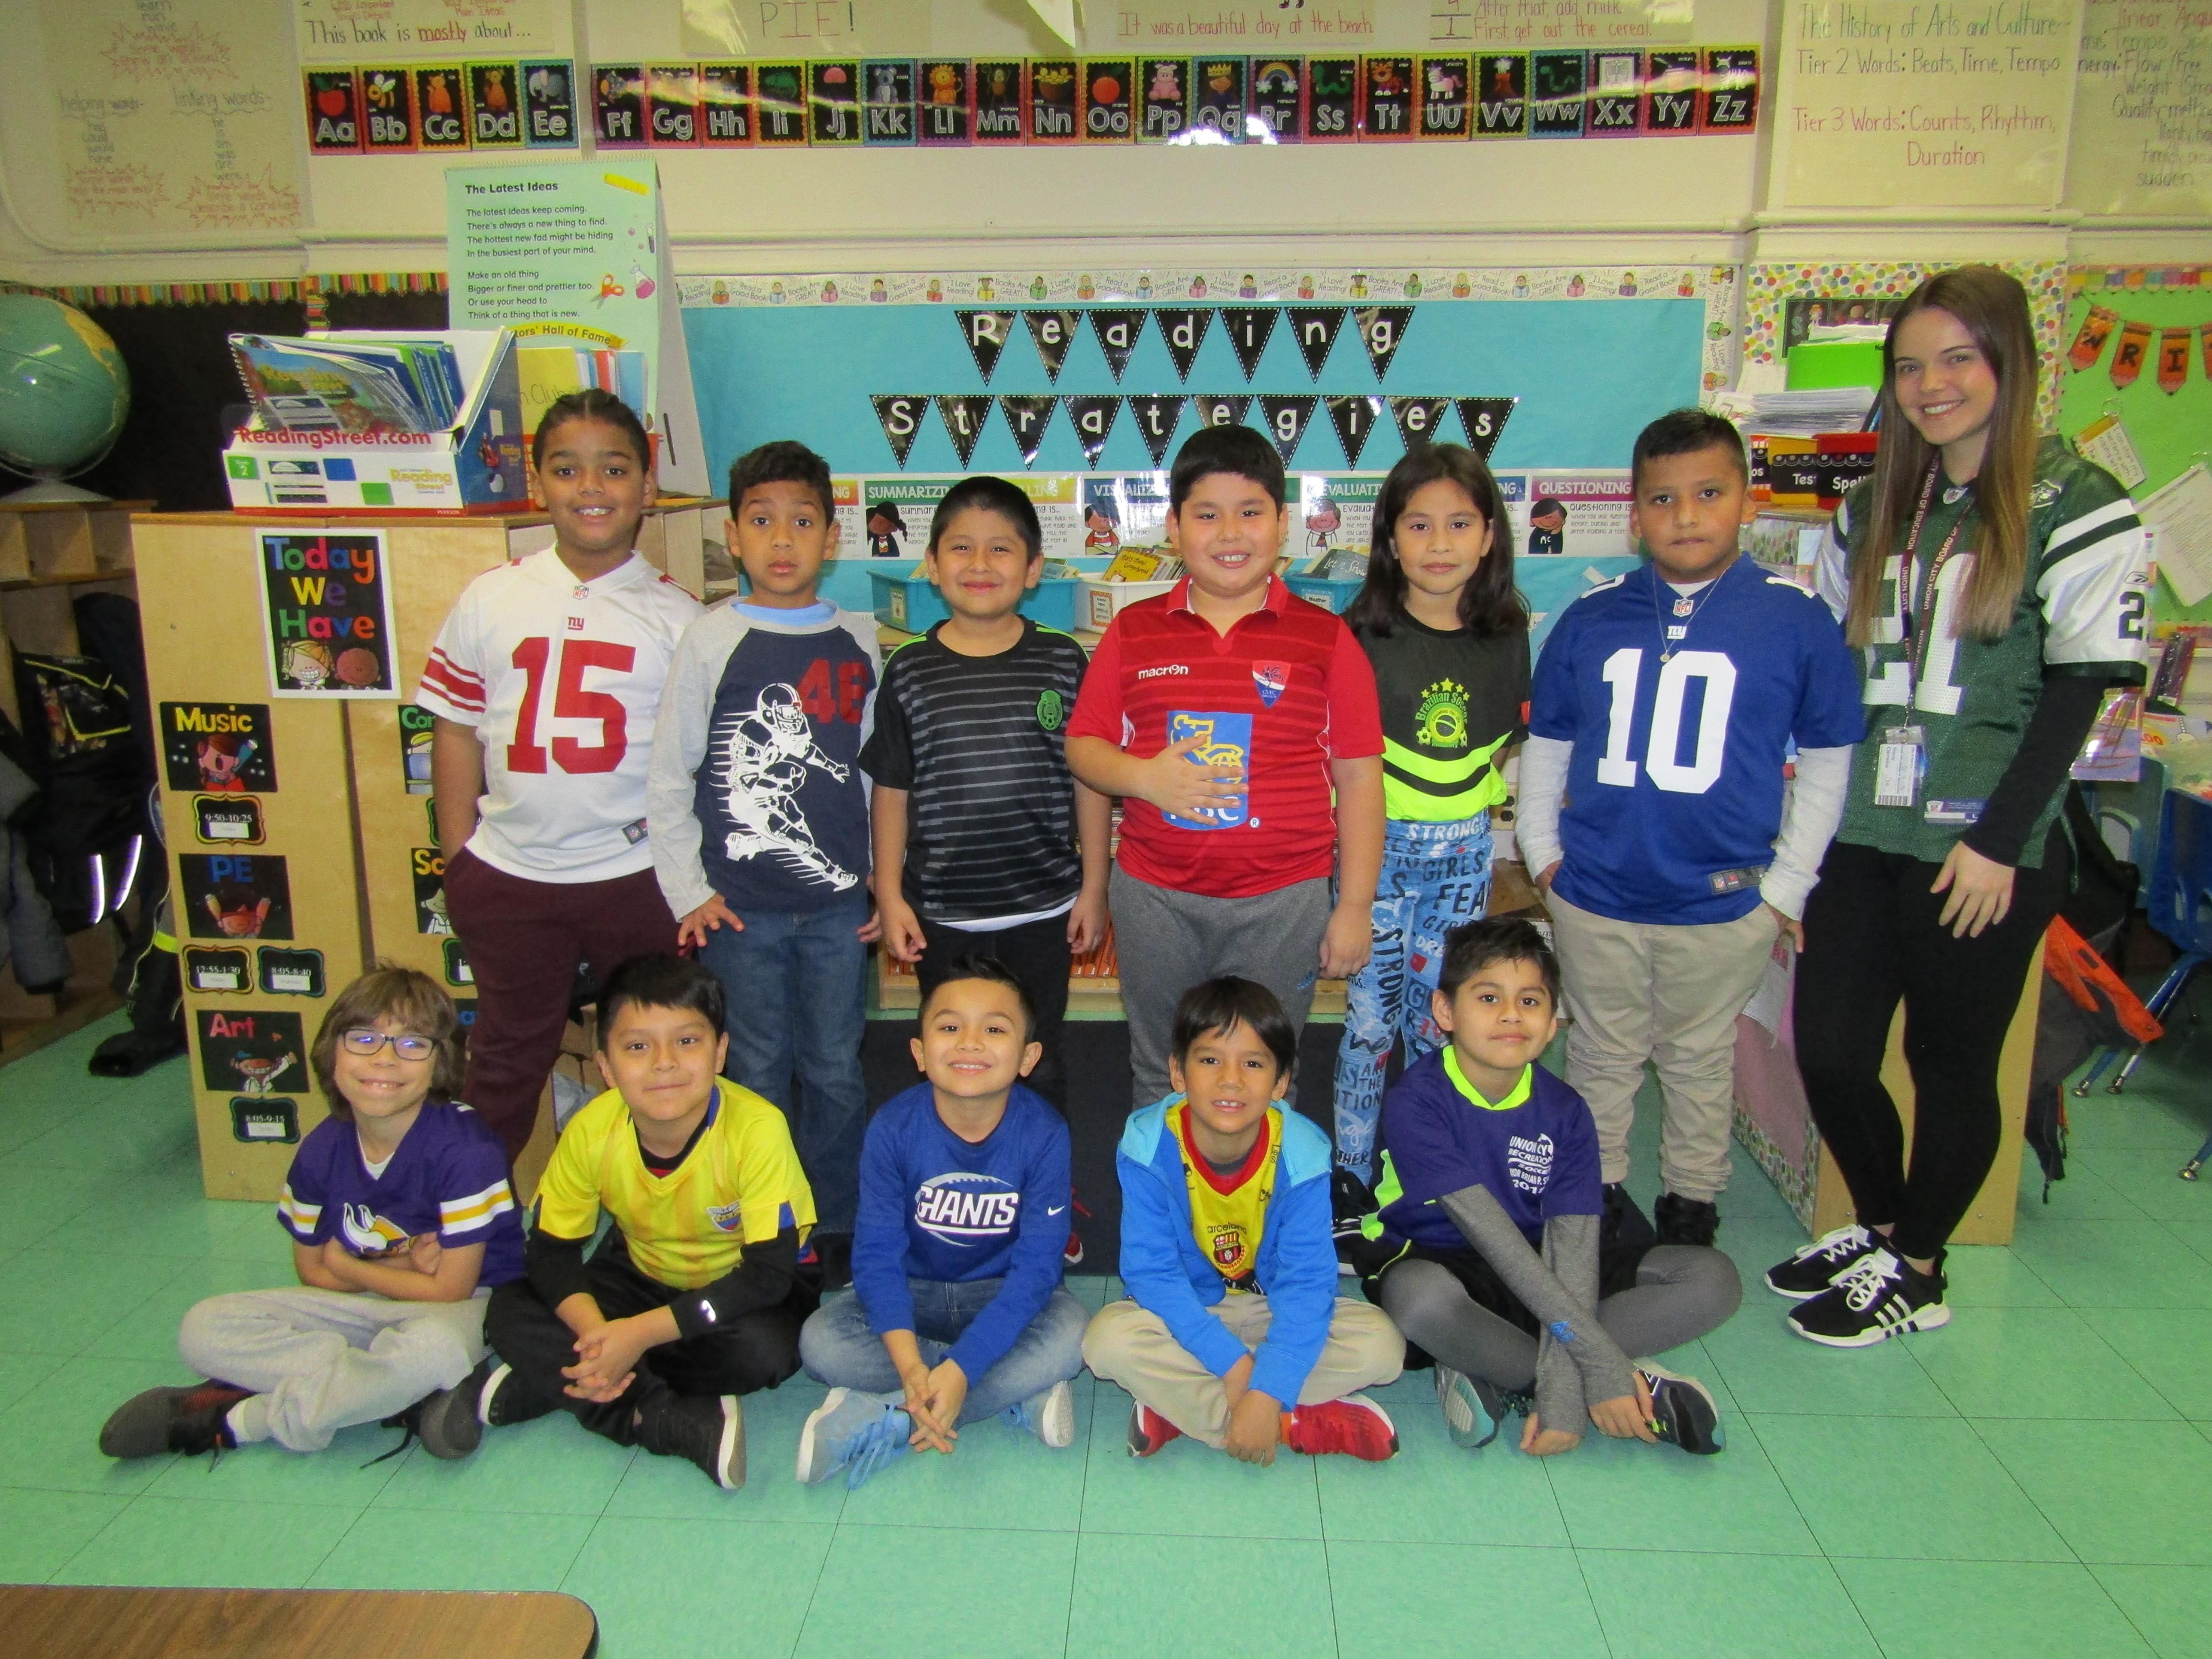 Ms. Carerra's Class wearing their sports Jerseys